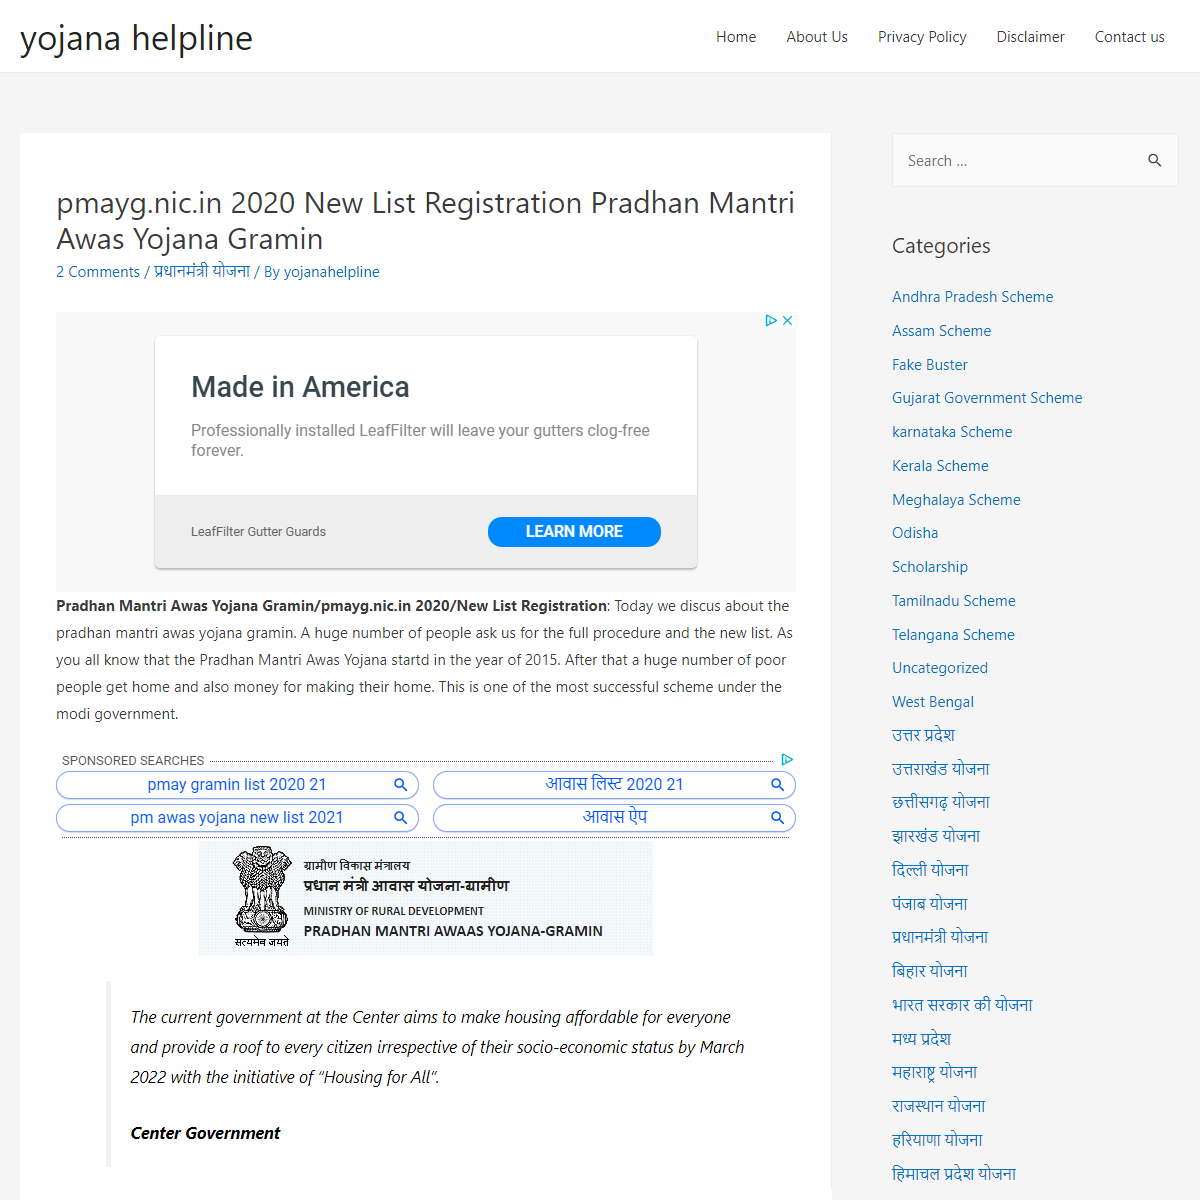 A complete backup of https://www.yojanahelpline.in/pmayg-nic-in-2020-new-list-registration/